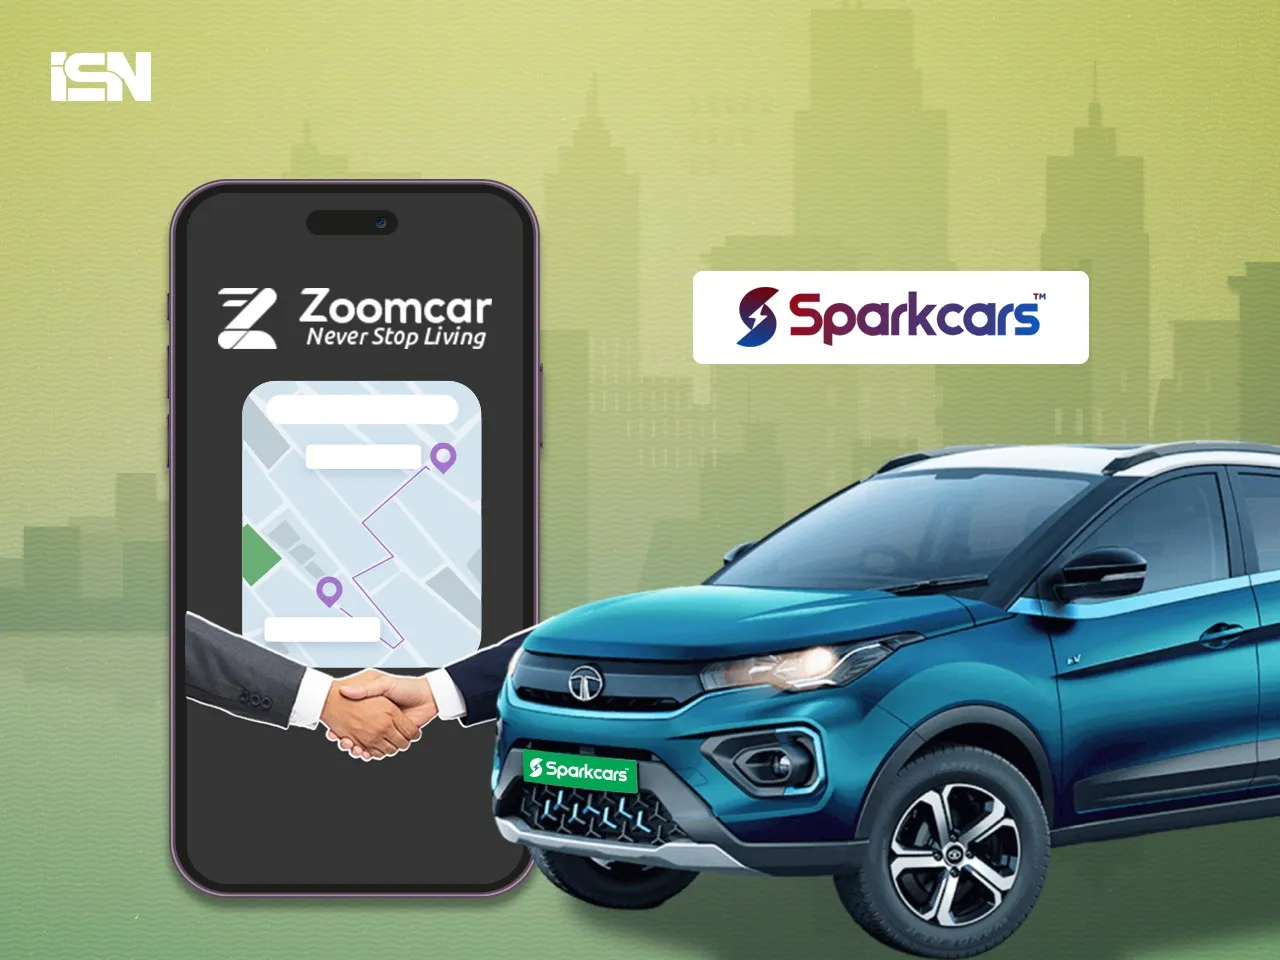 Zoomcar partners with SPARKCARS